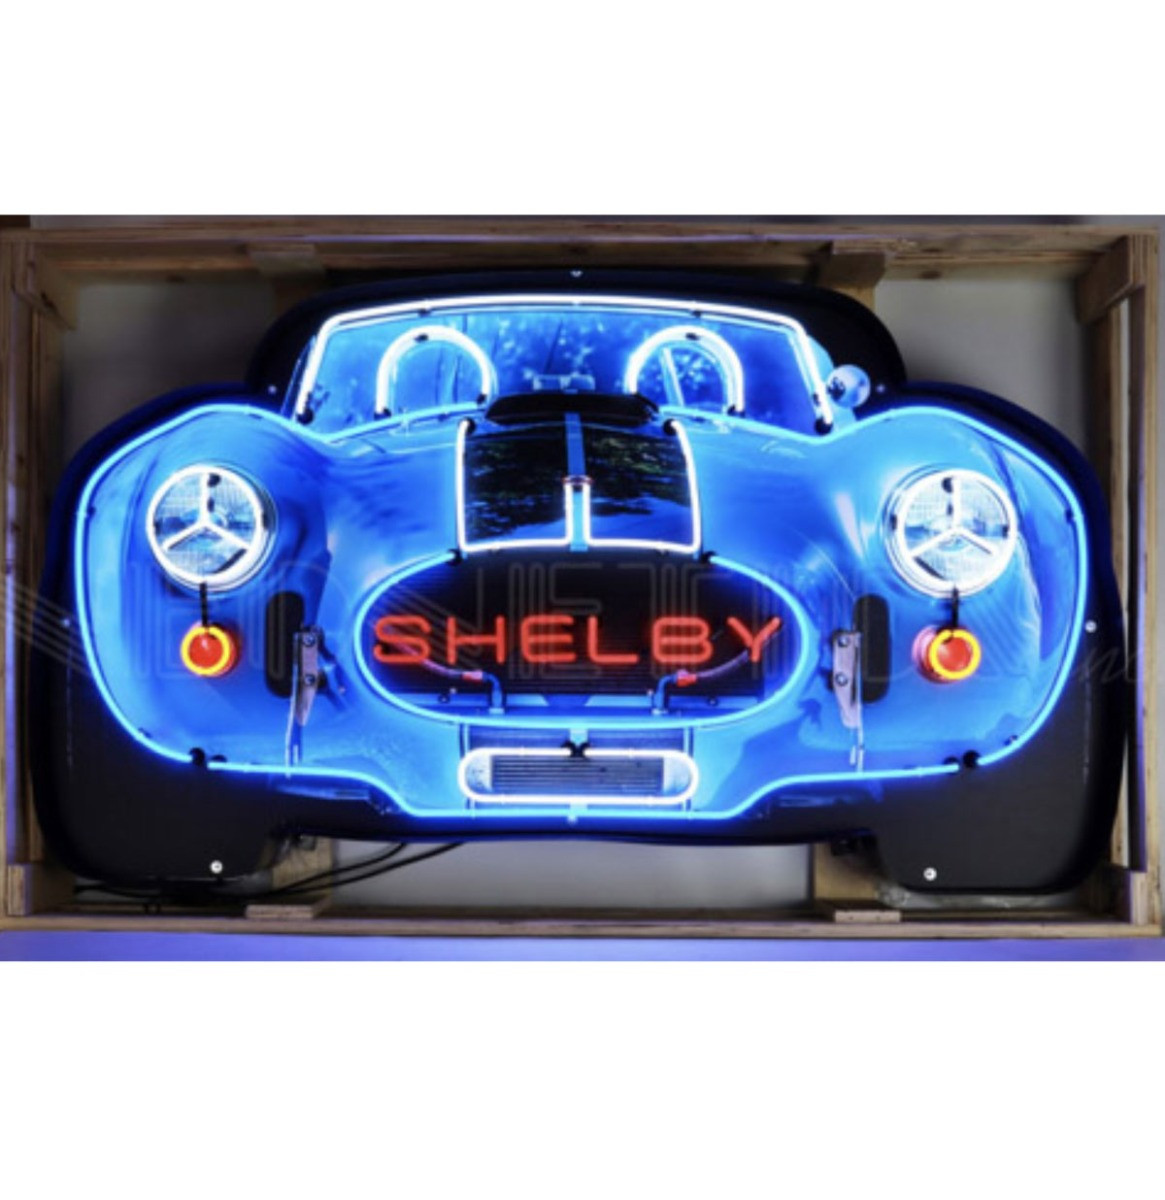 AC Cobra Shelby Autoneus Neon Verlichting XL - 152 x 86 cm